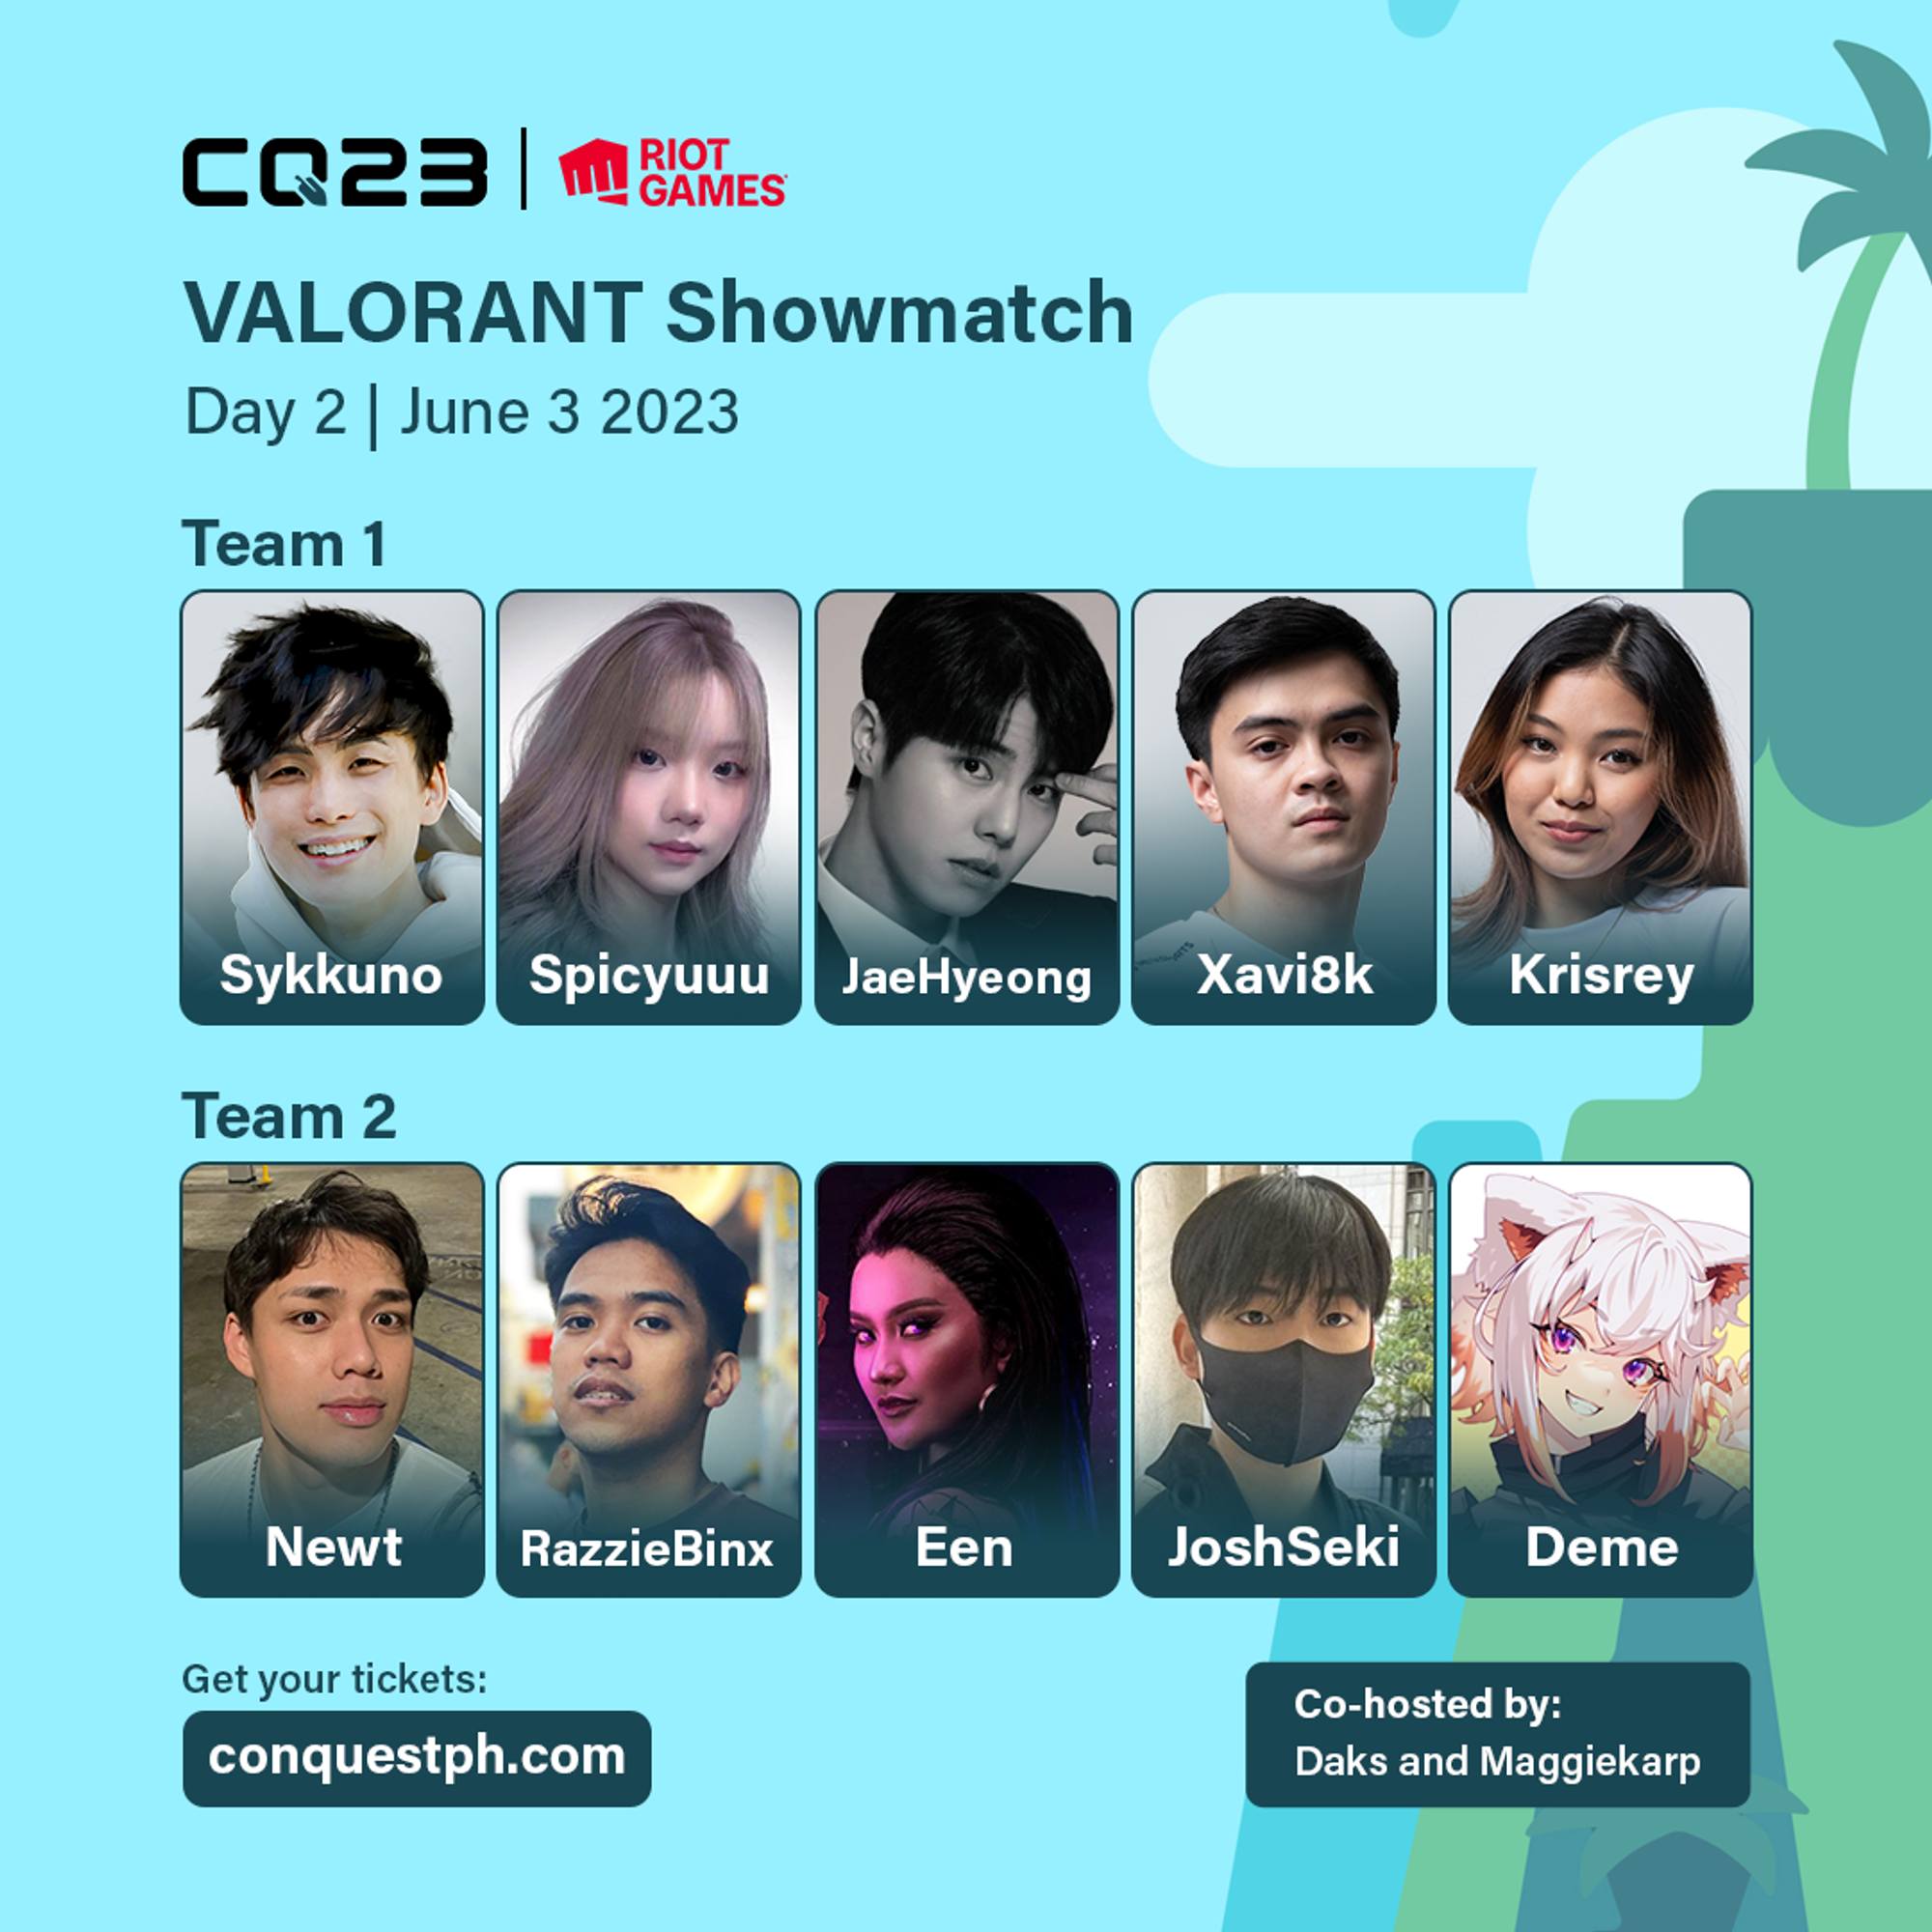 Conquest Festival 2023 Guide Valorant Showmatch